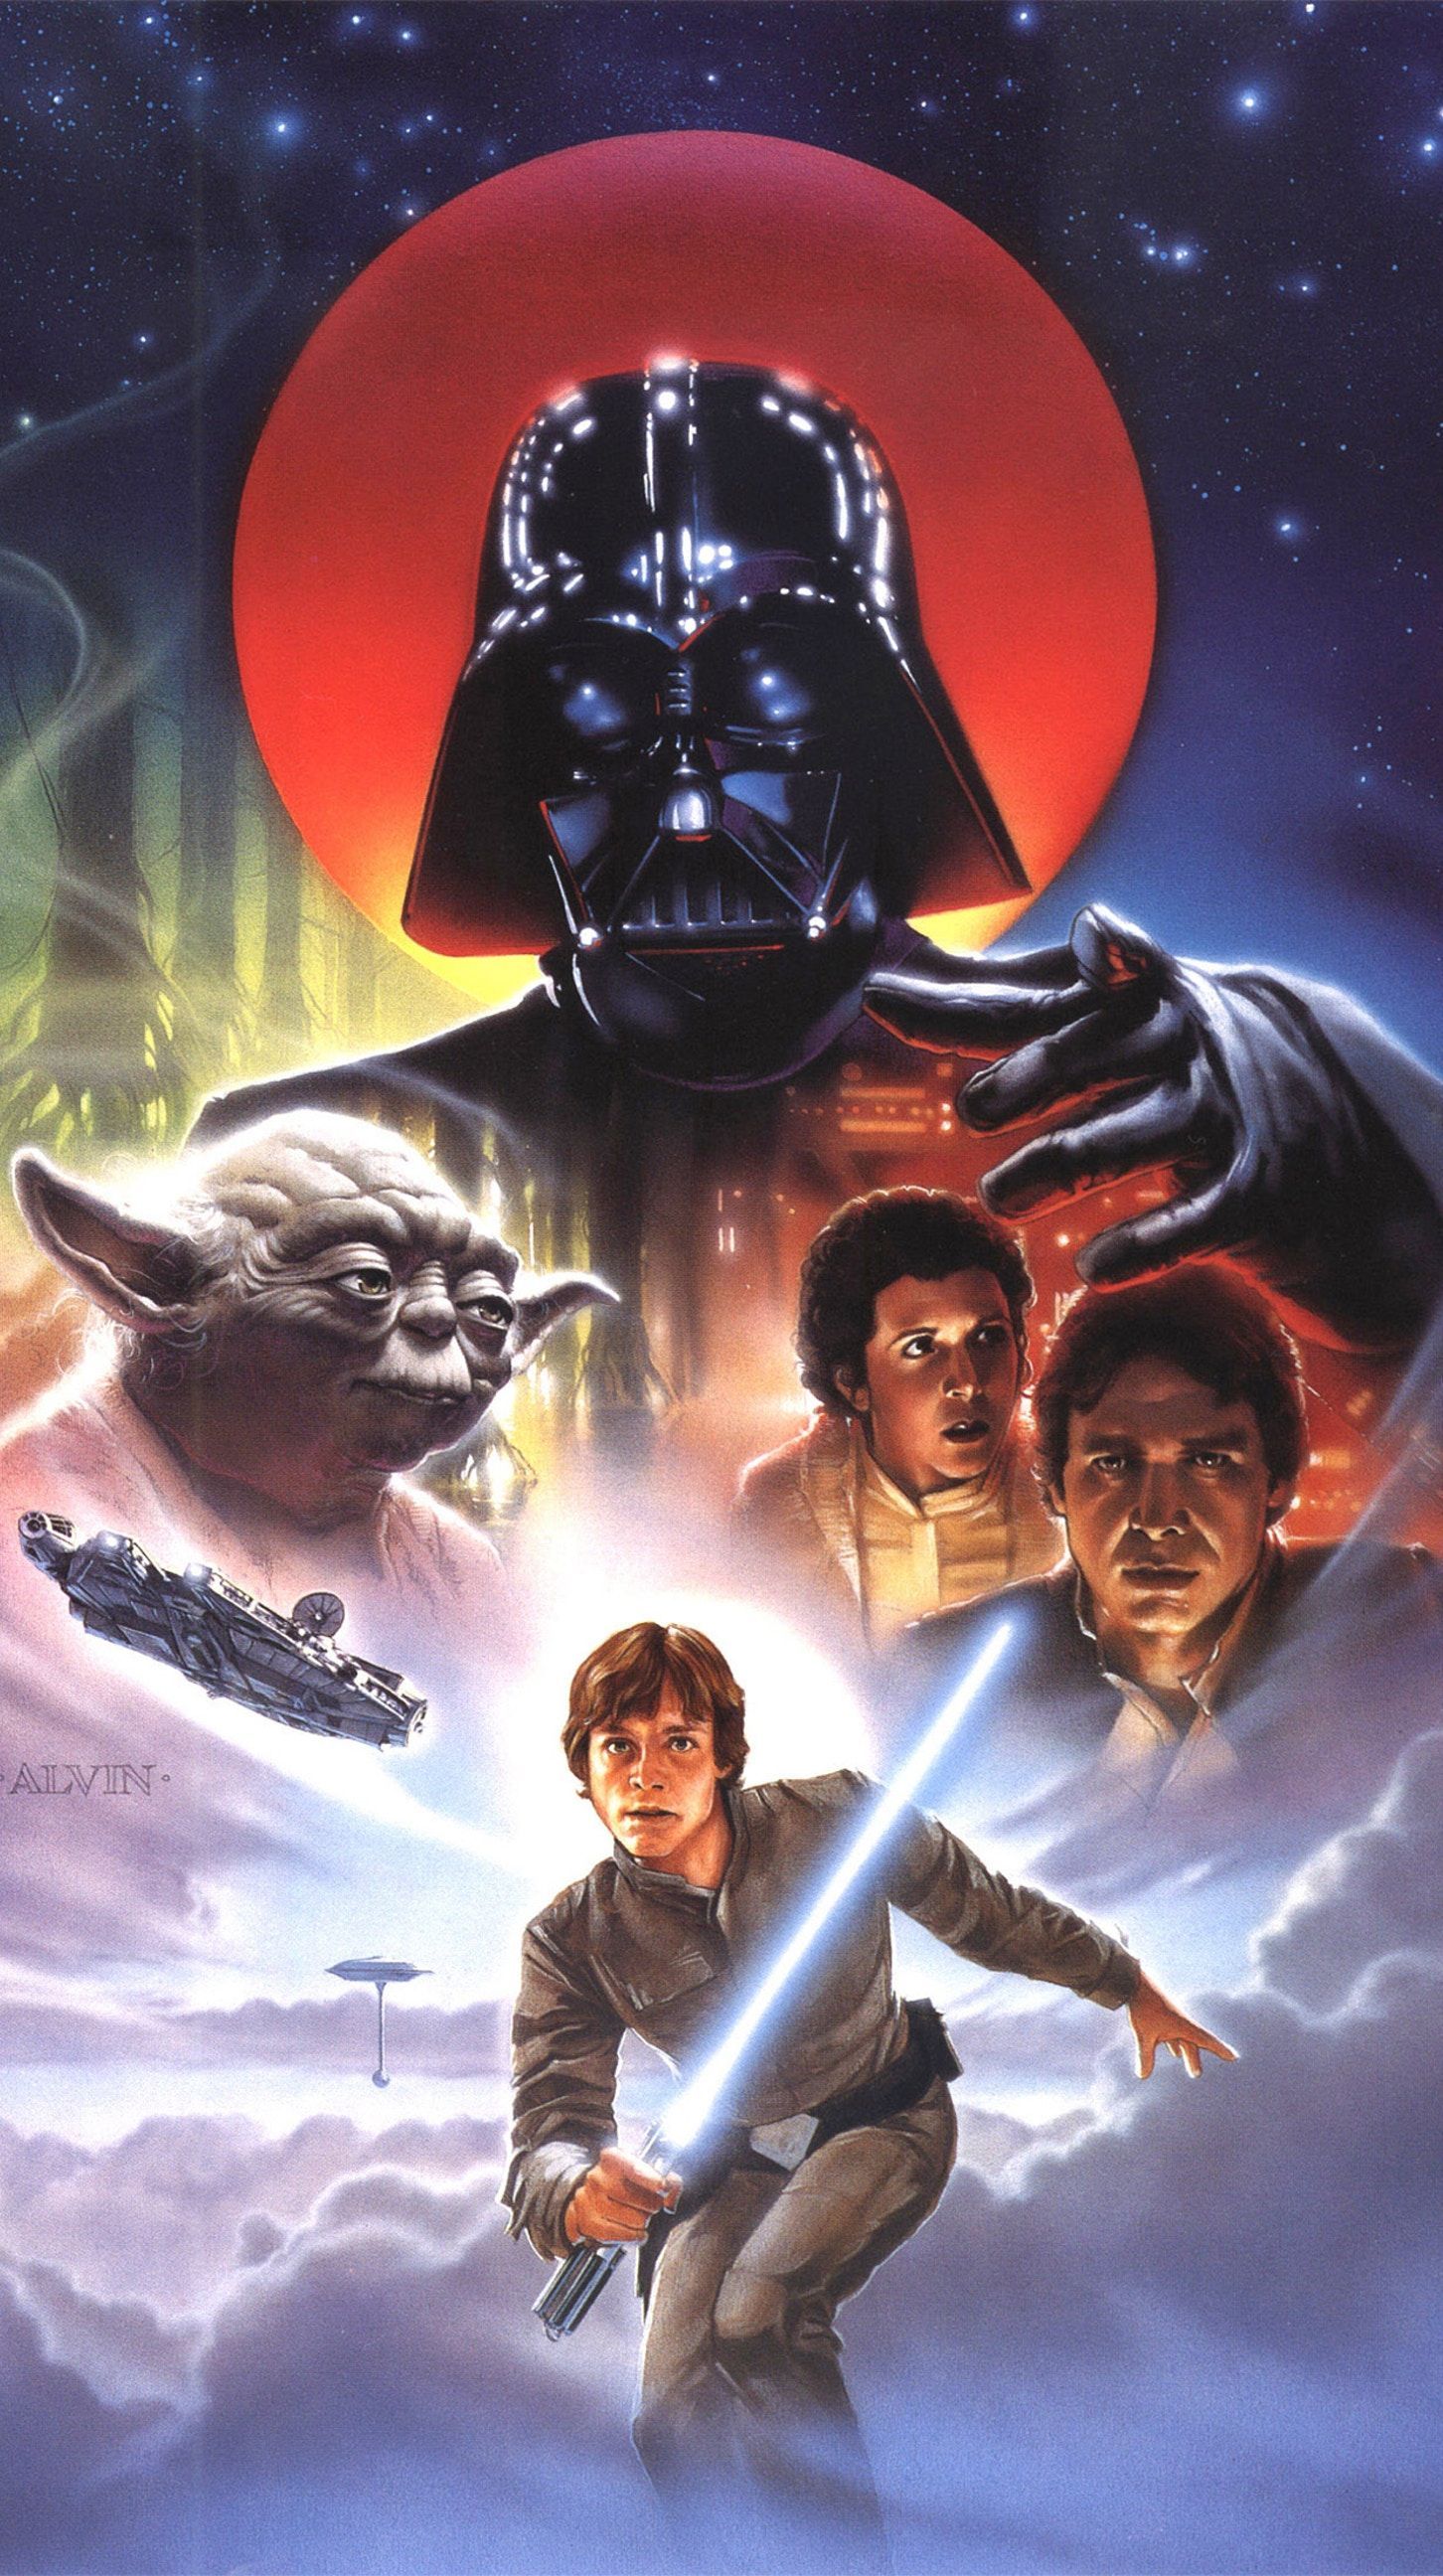 The Empire Strikes Back. Star wars poster, Star wars art, Star wars wallpaper